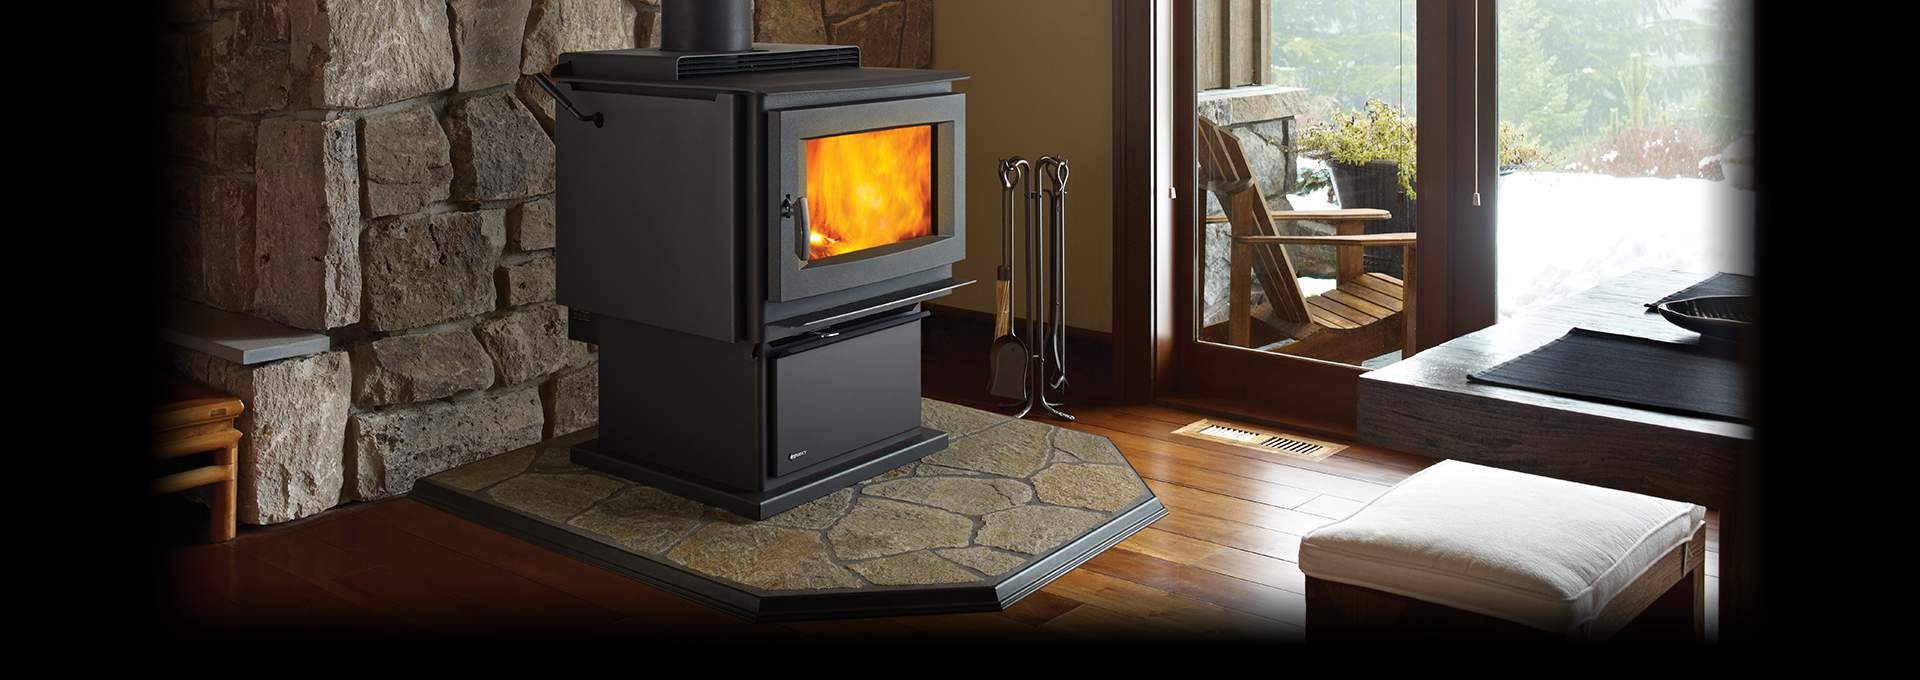 Wood Burner Fireplace Ideas Unique 26 Re Mended Hardwood Floor Fireplace Transition